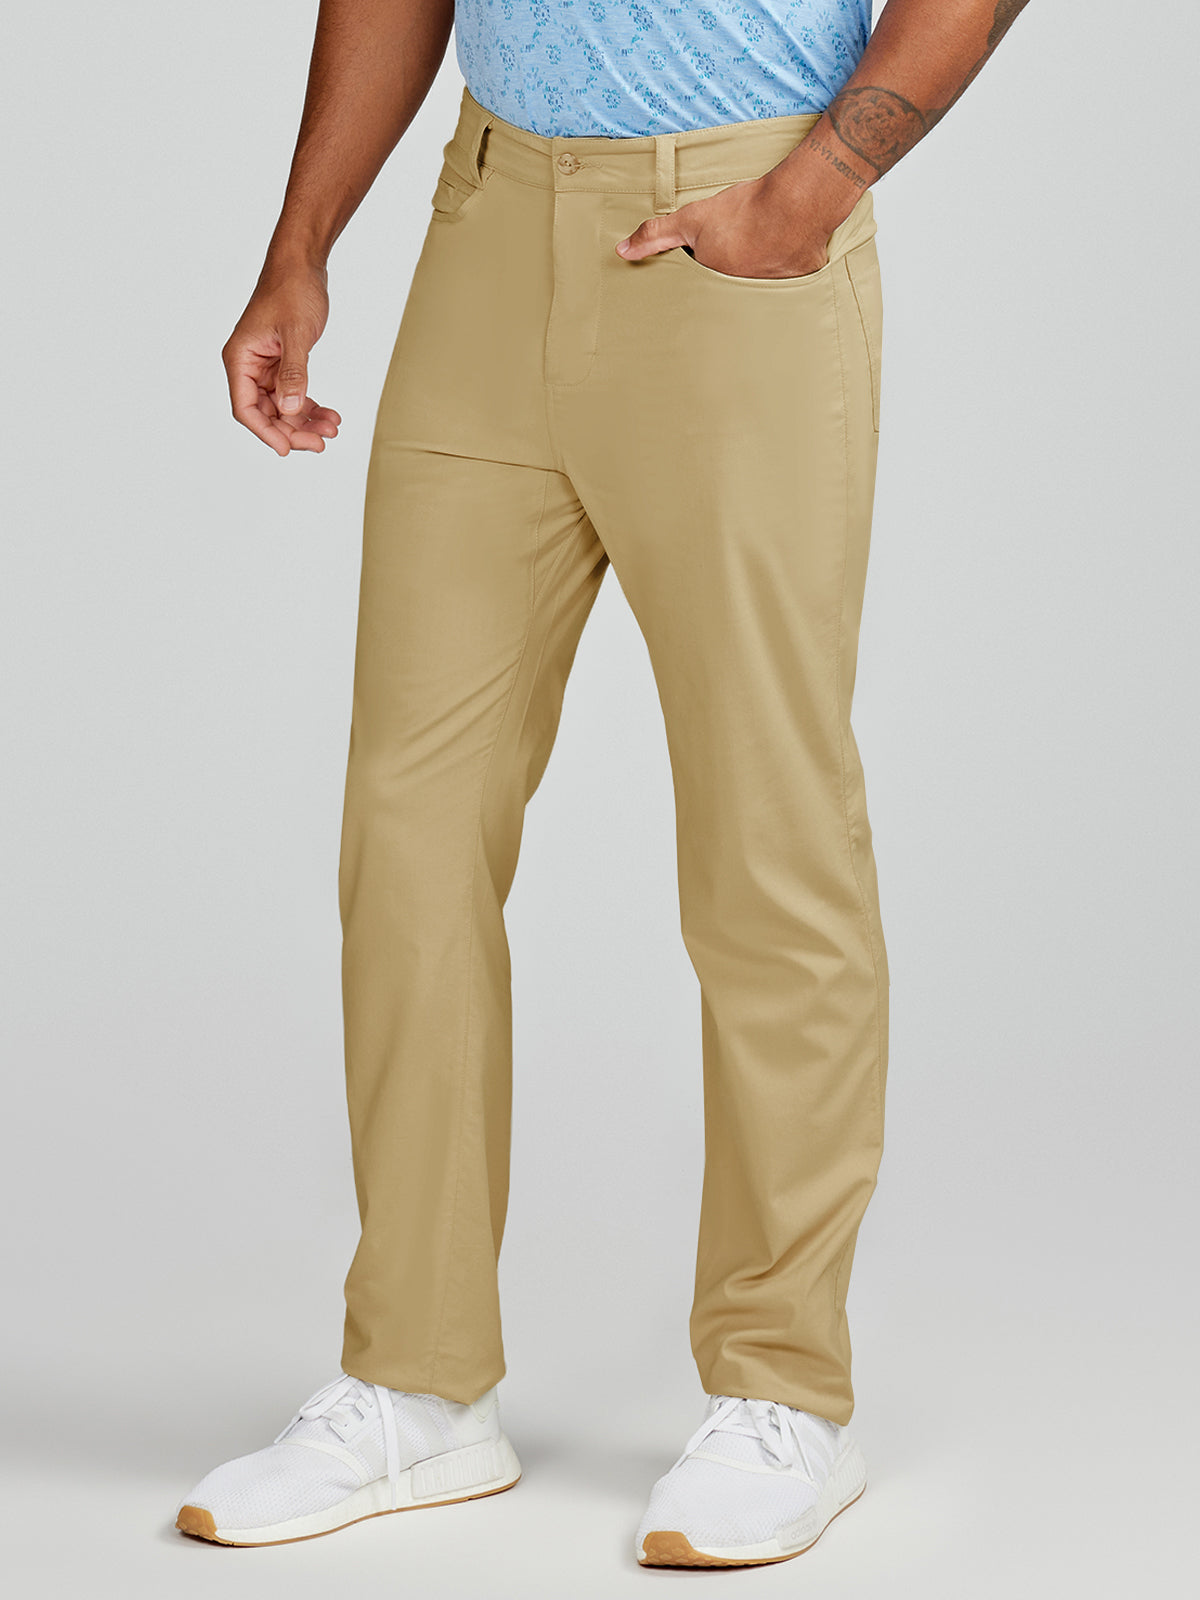 Men's Golf Pants - All In Motion 36x30 Colors- Navy//Black//Khaki